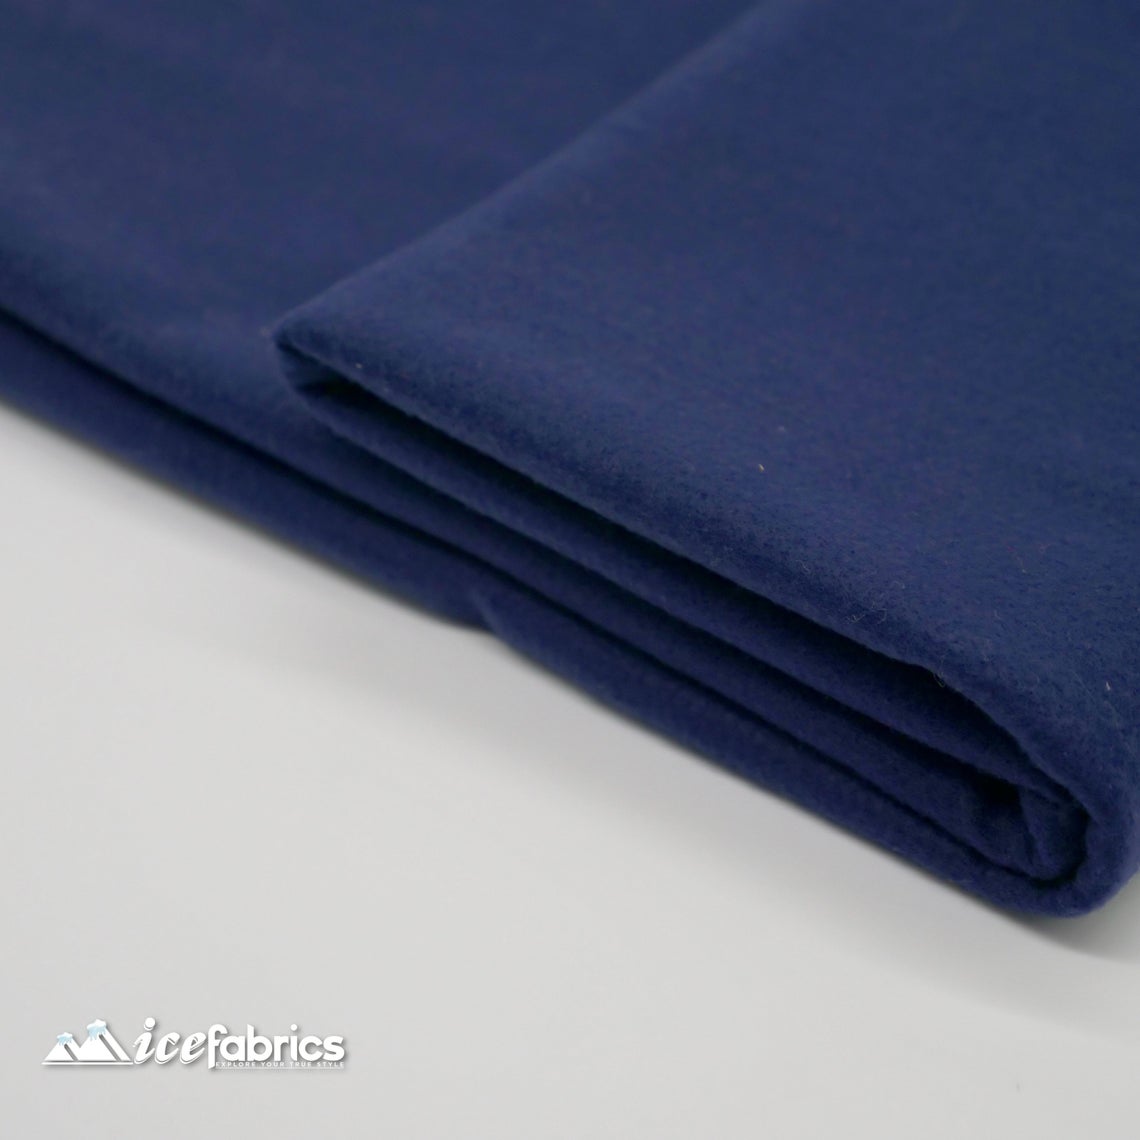 Acrylic Felt Fabric By The Roll | 20 yards | Wholesale Fabric ICE FABRICS Navy Blue